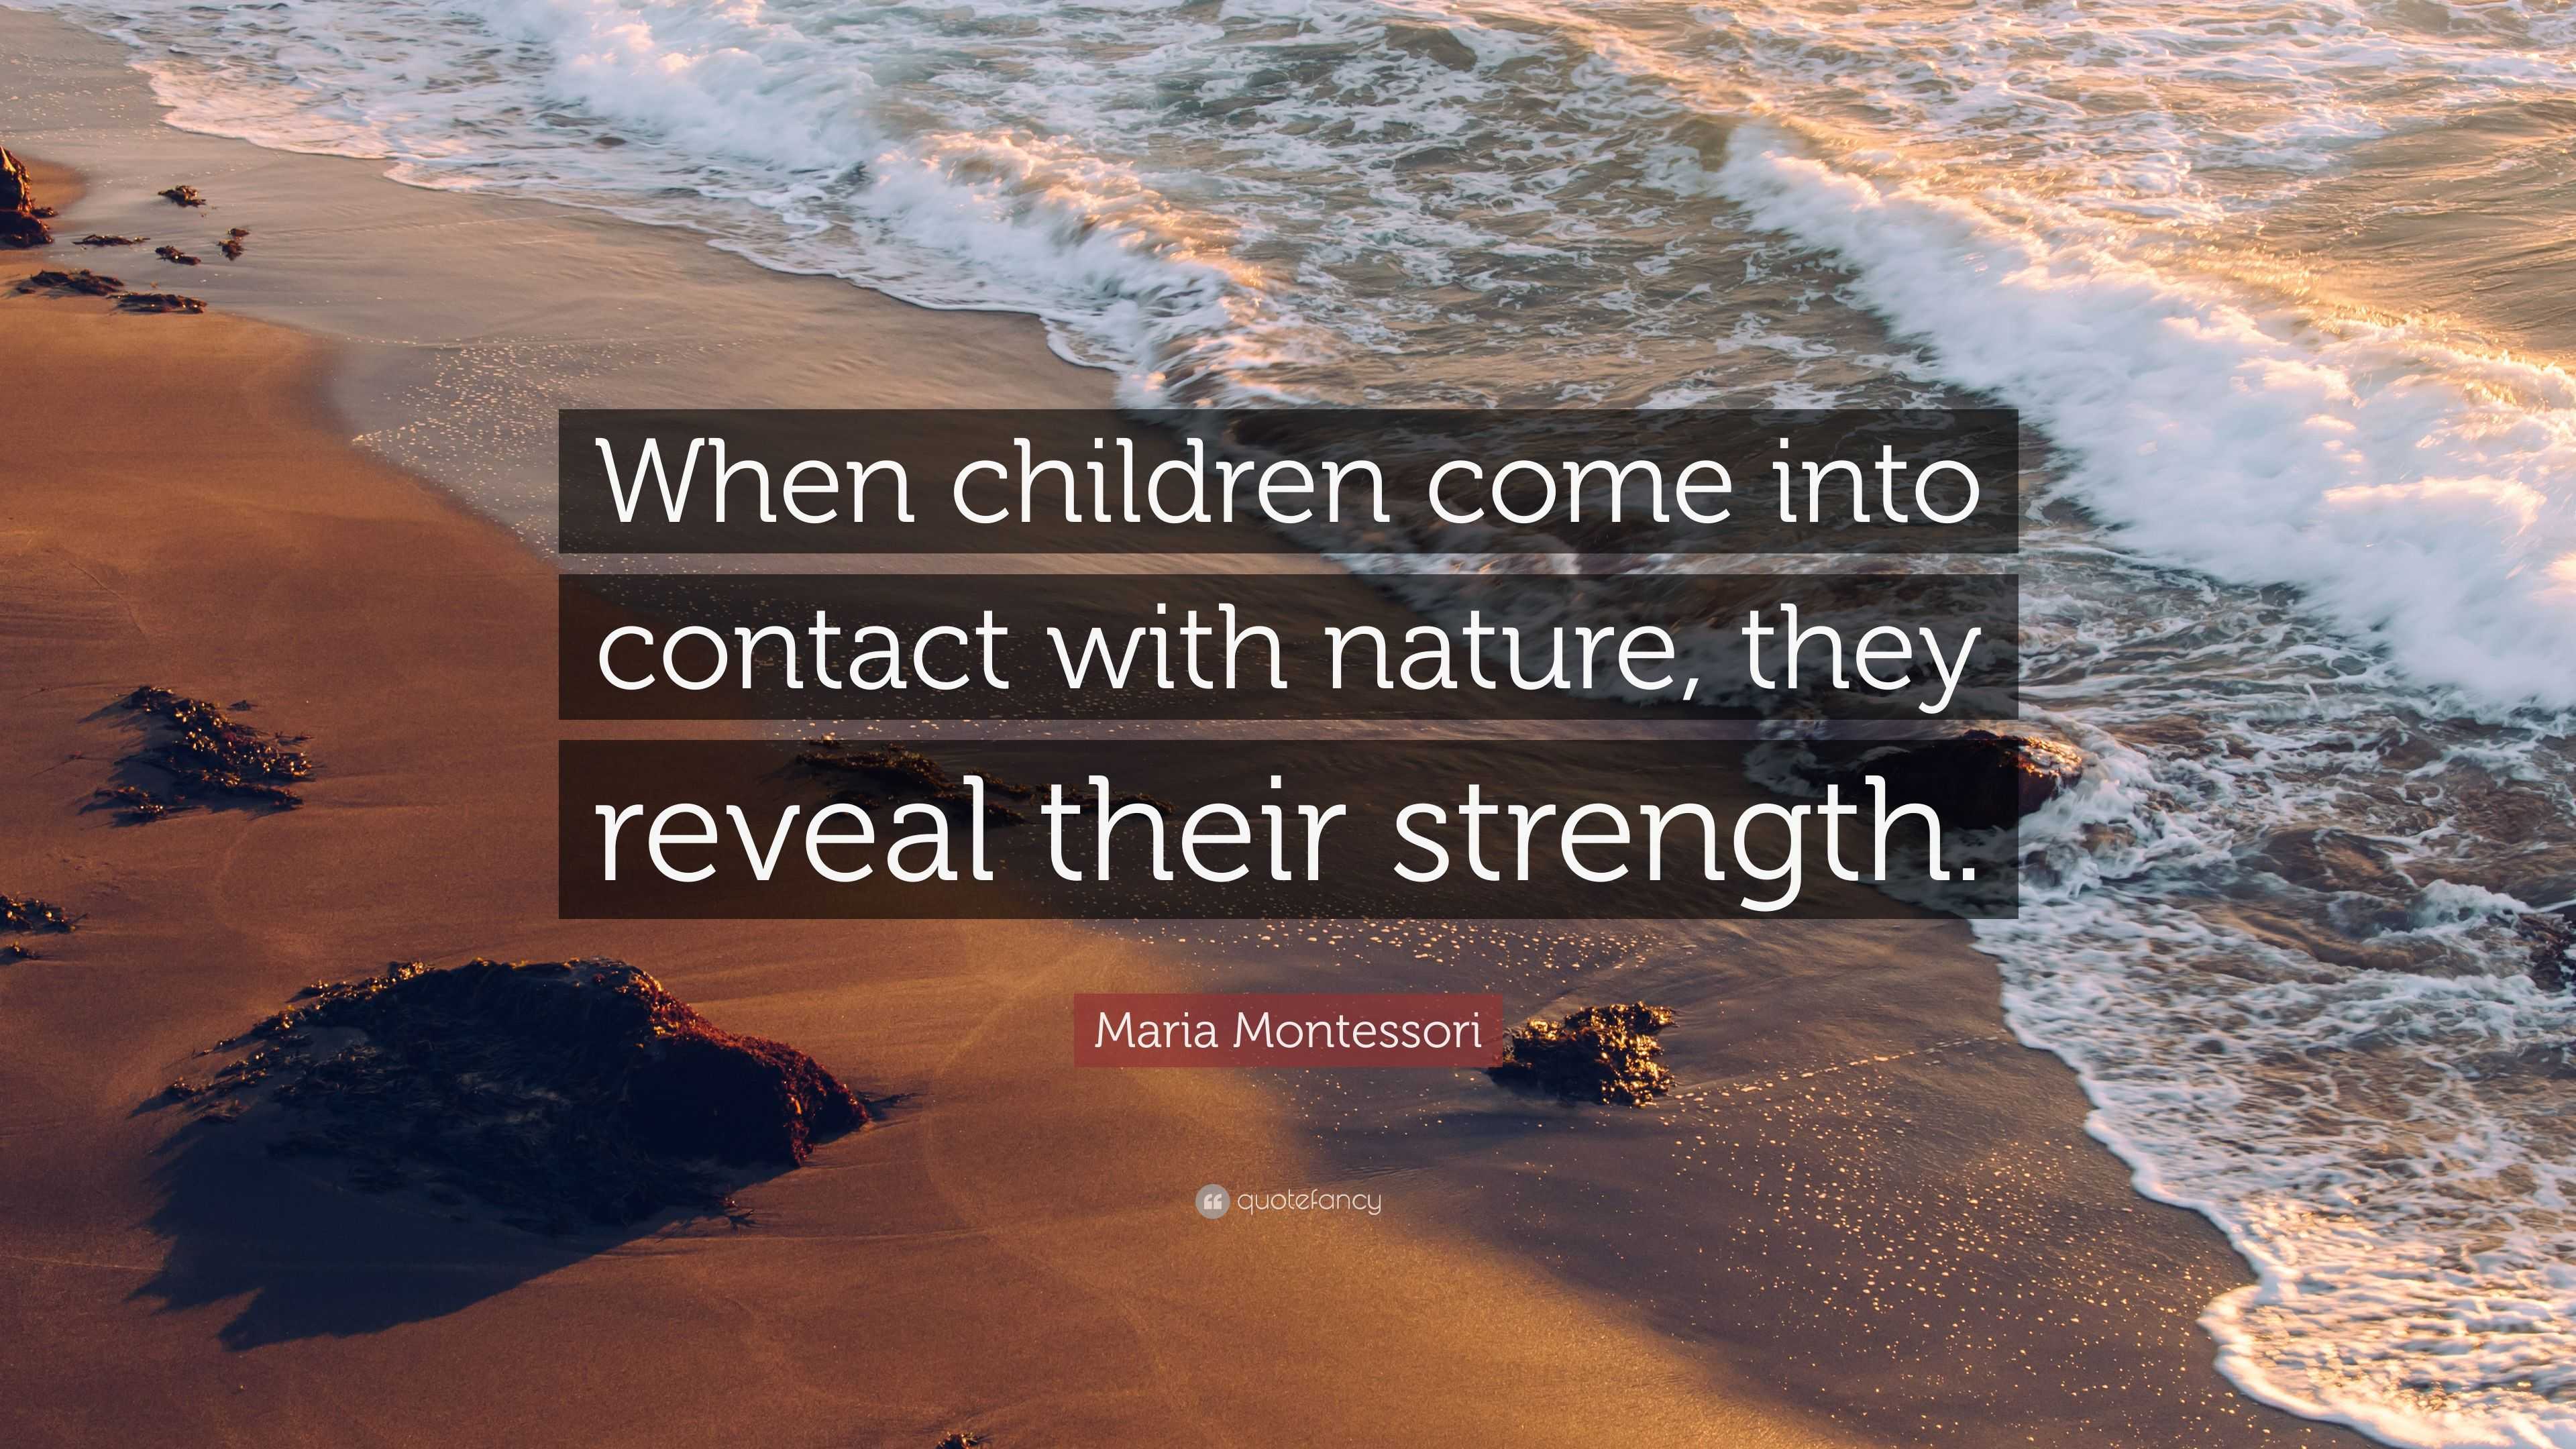 Maria Montessori Quote: “When children come contact nature, they their